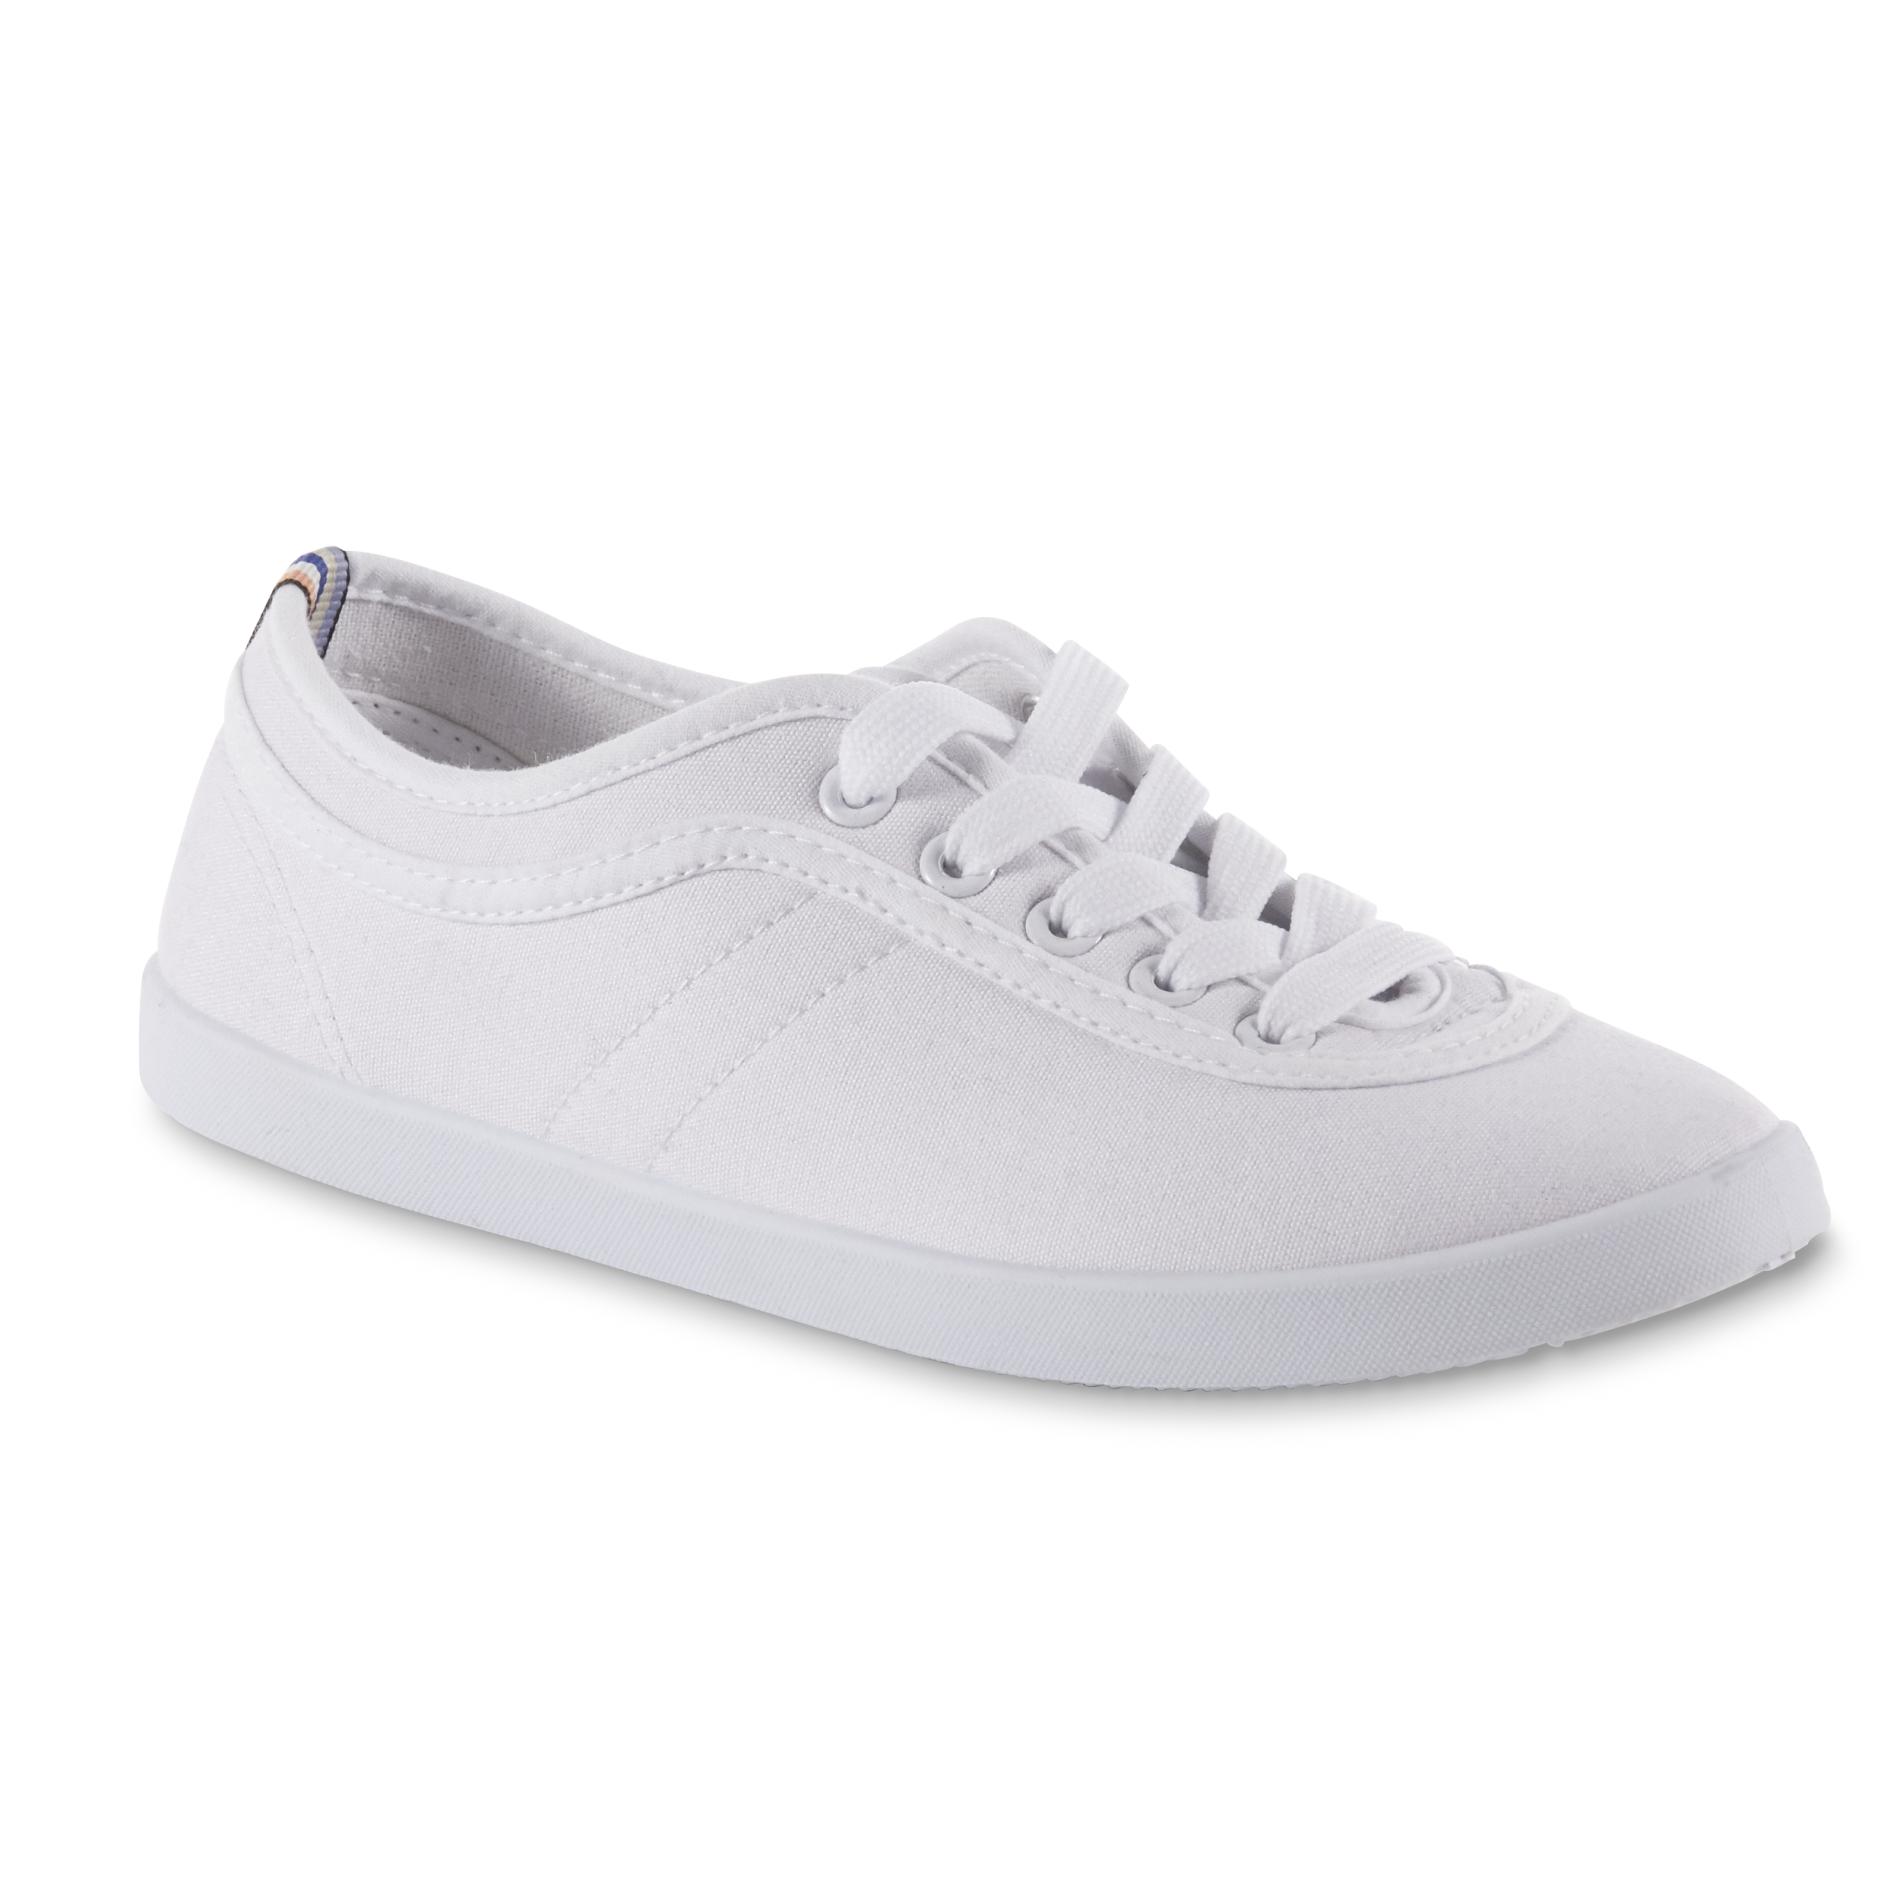 white shoes kmart